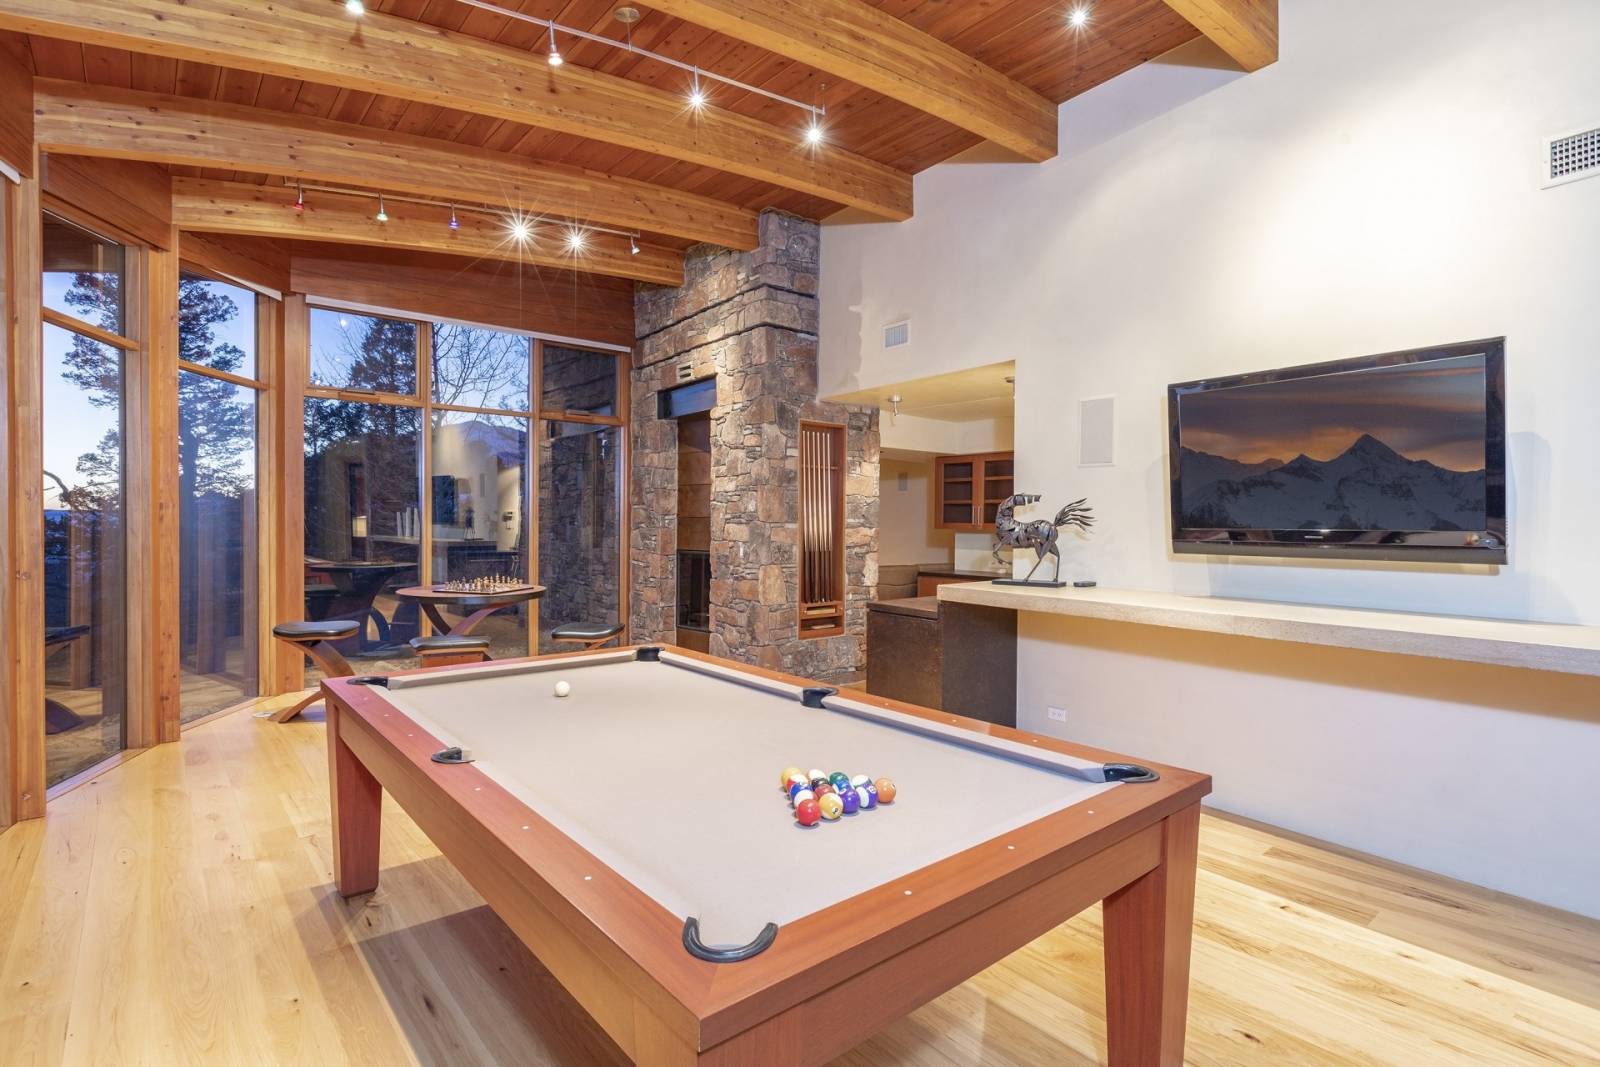 Telluride Vacation Rentals, PaGomo* - Pool table for  indoor fun nights